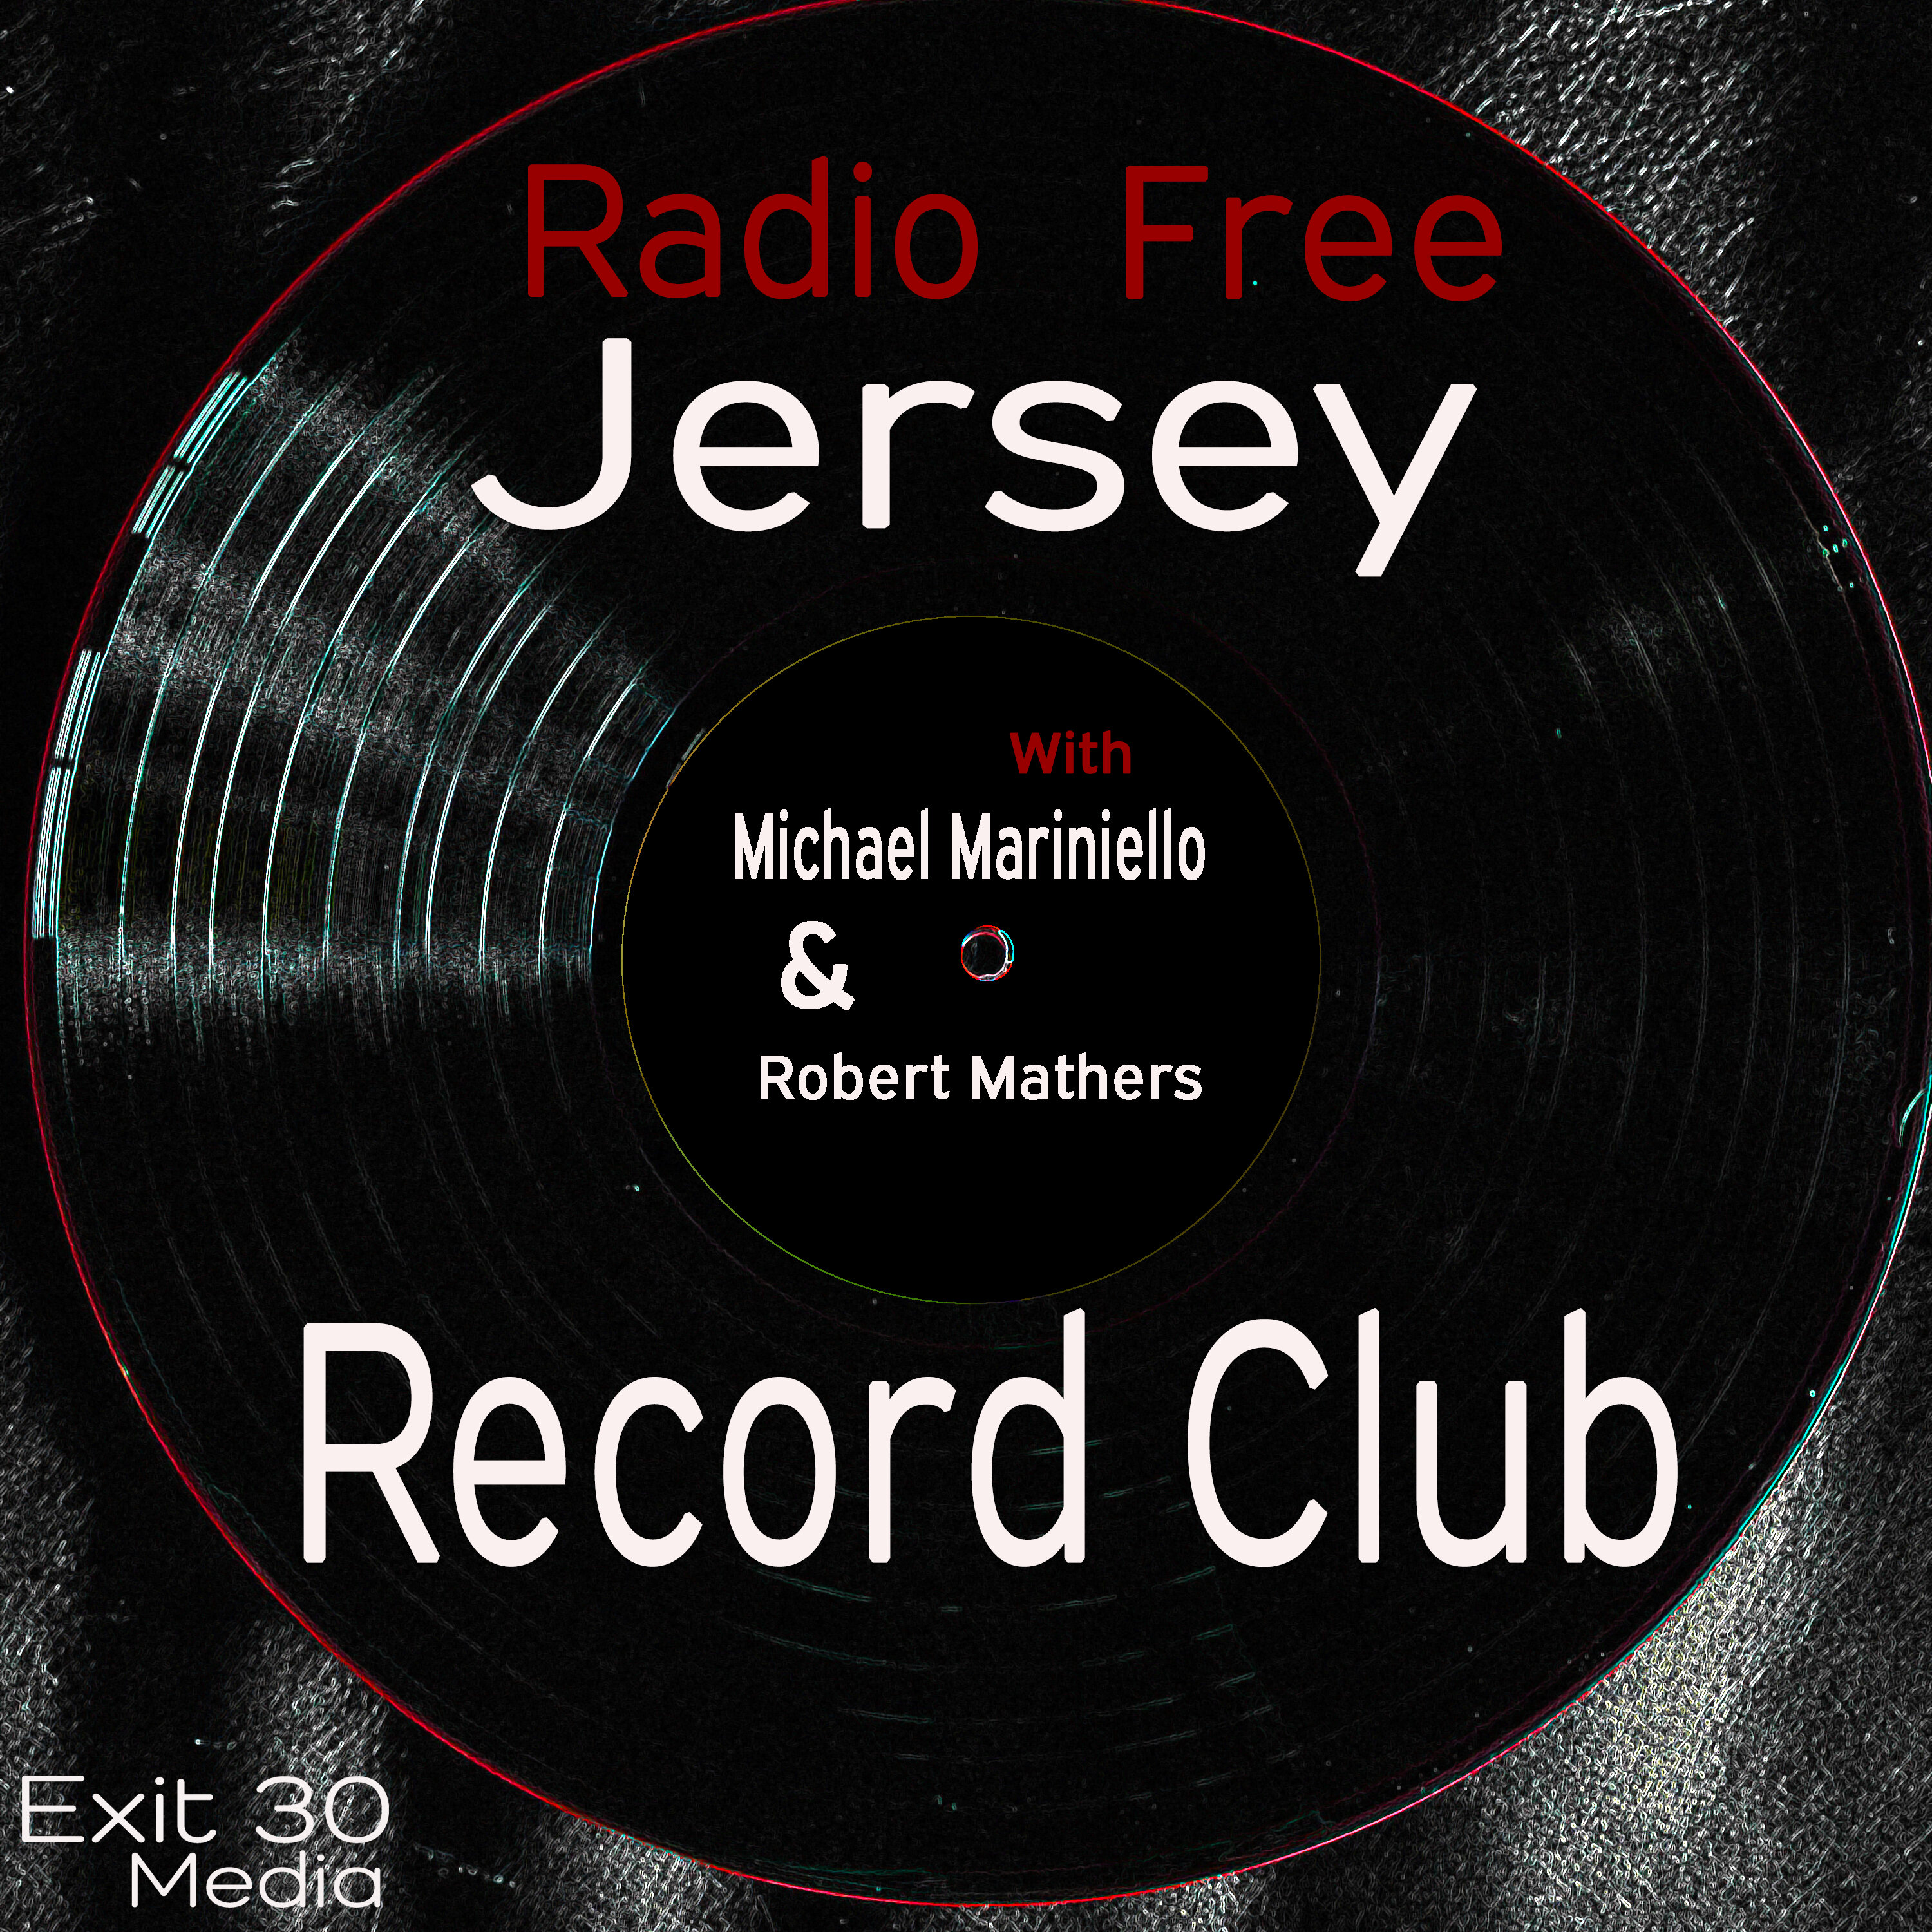 Radio Free Jersey Record Club